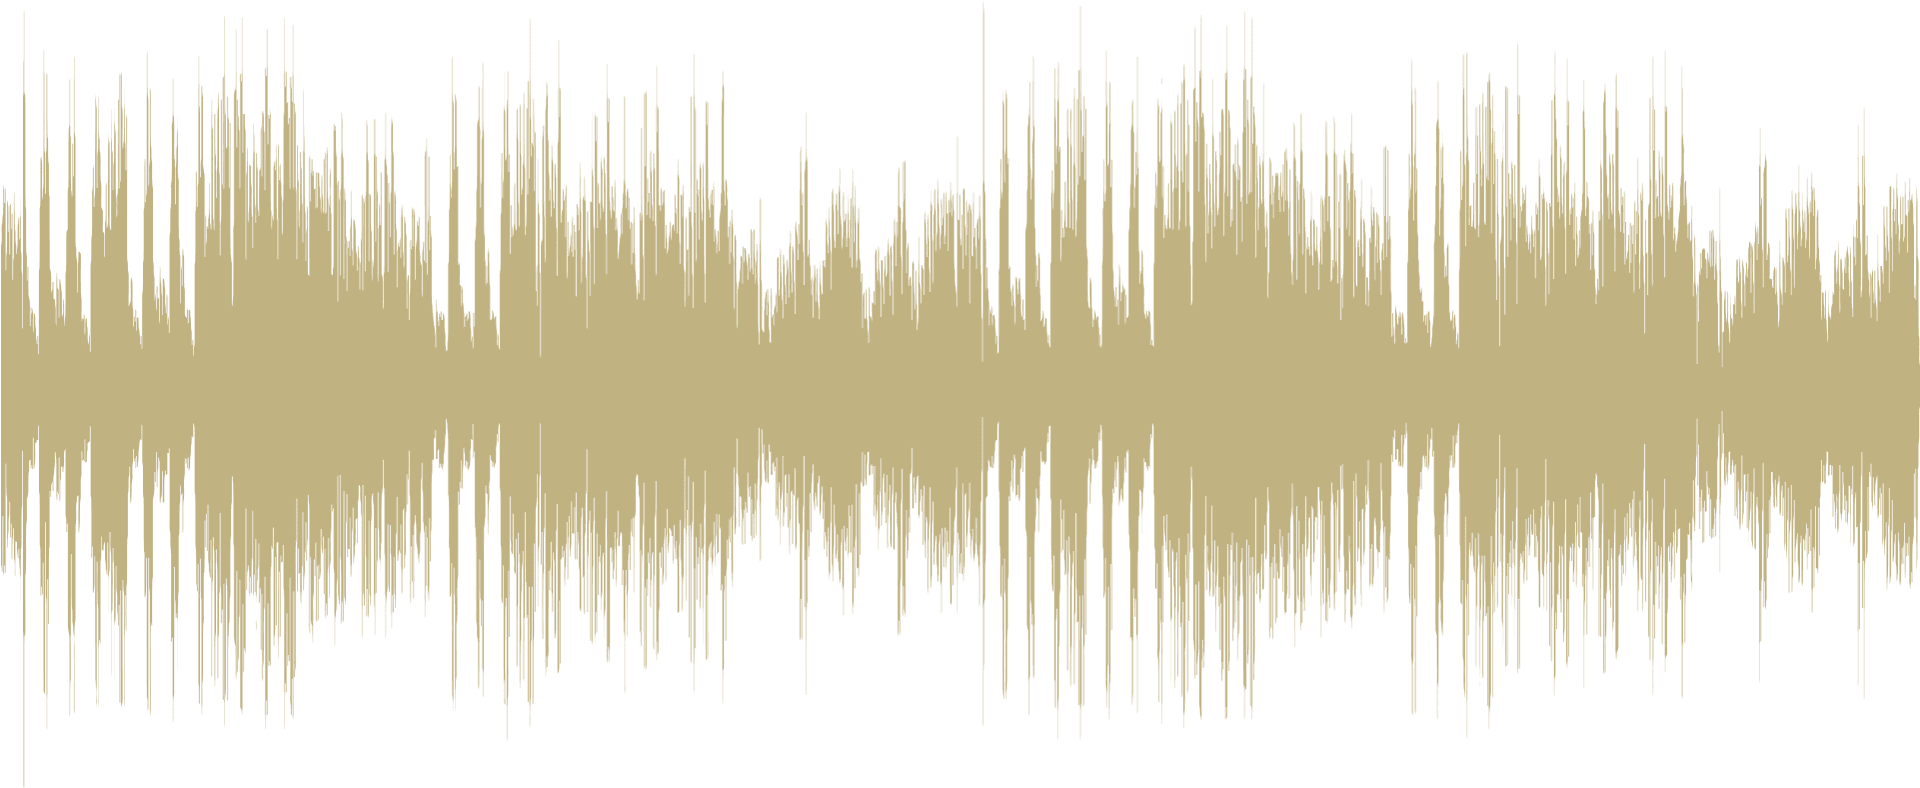 Audio Waveform Visualization PNG image